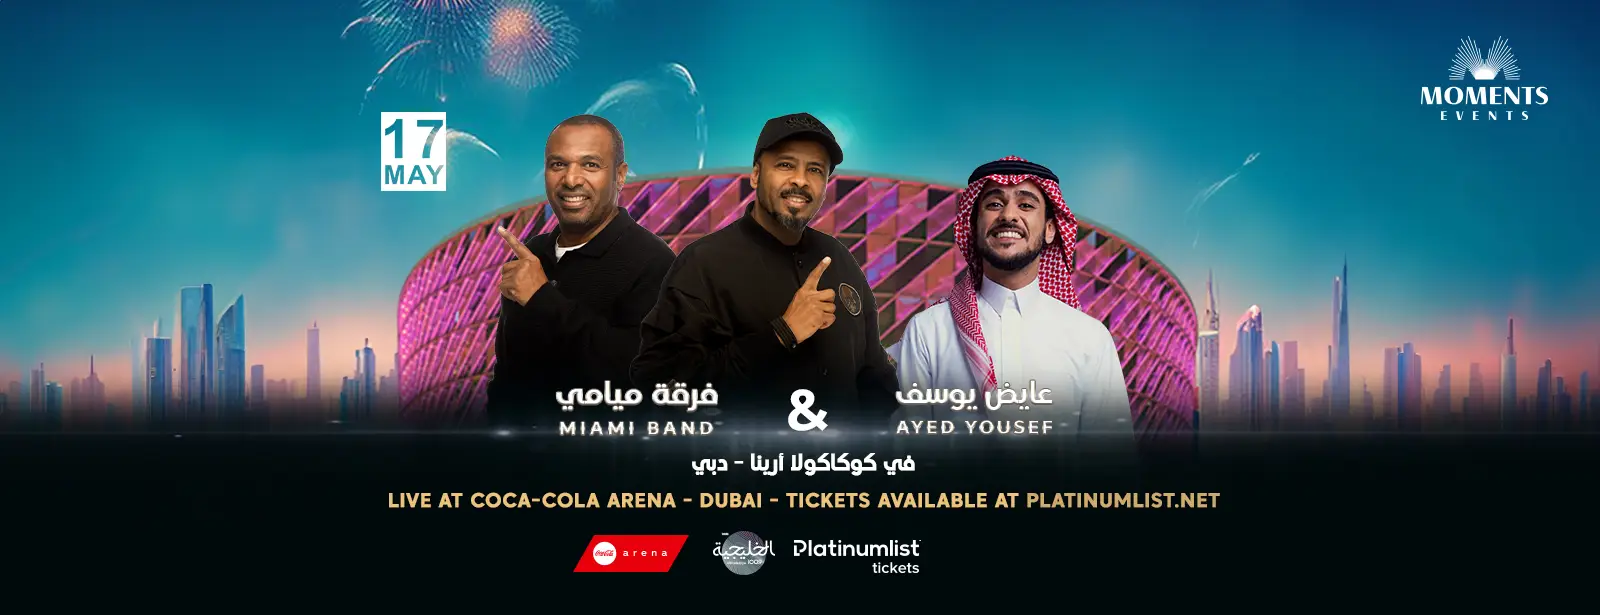 Miami Band & Ayed Yousef Live at Coca-Cola Arena, Dubai || Wow-Emirates